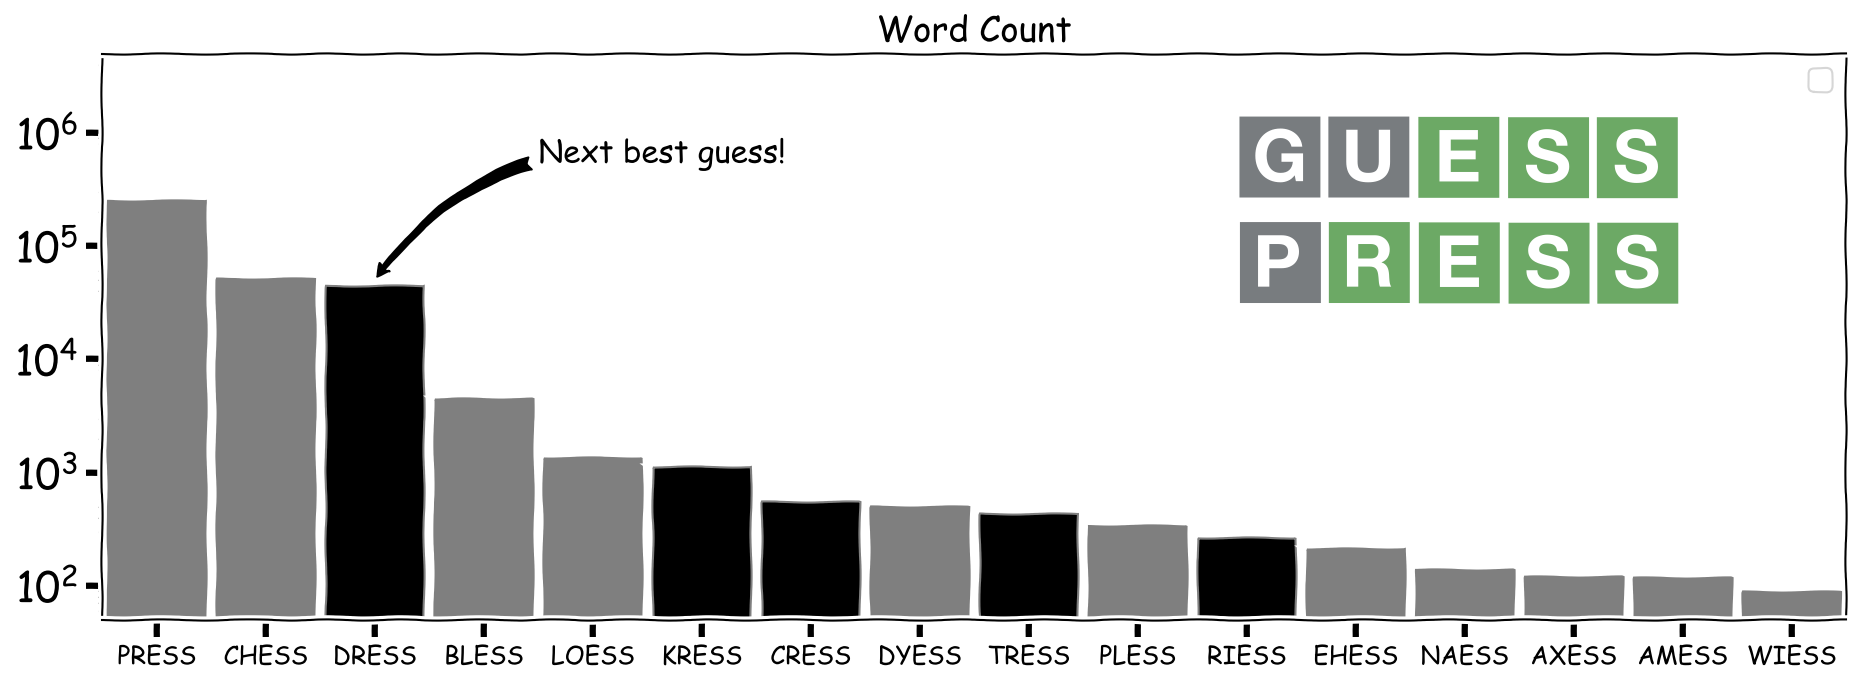 wiki_word_count_constraint_PRESS_vec